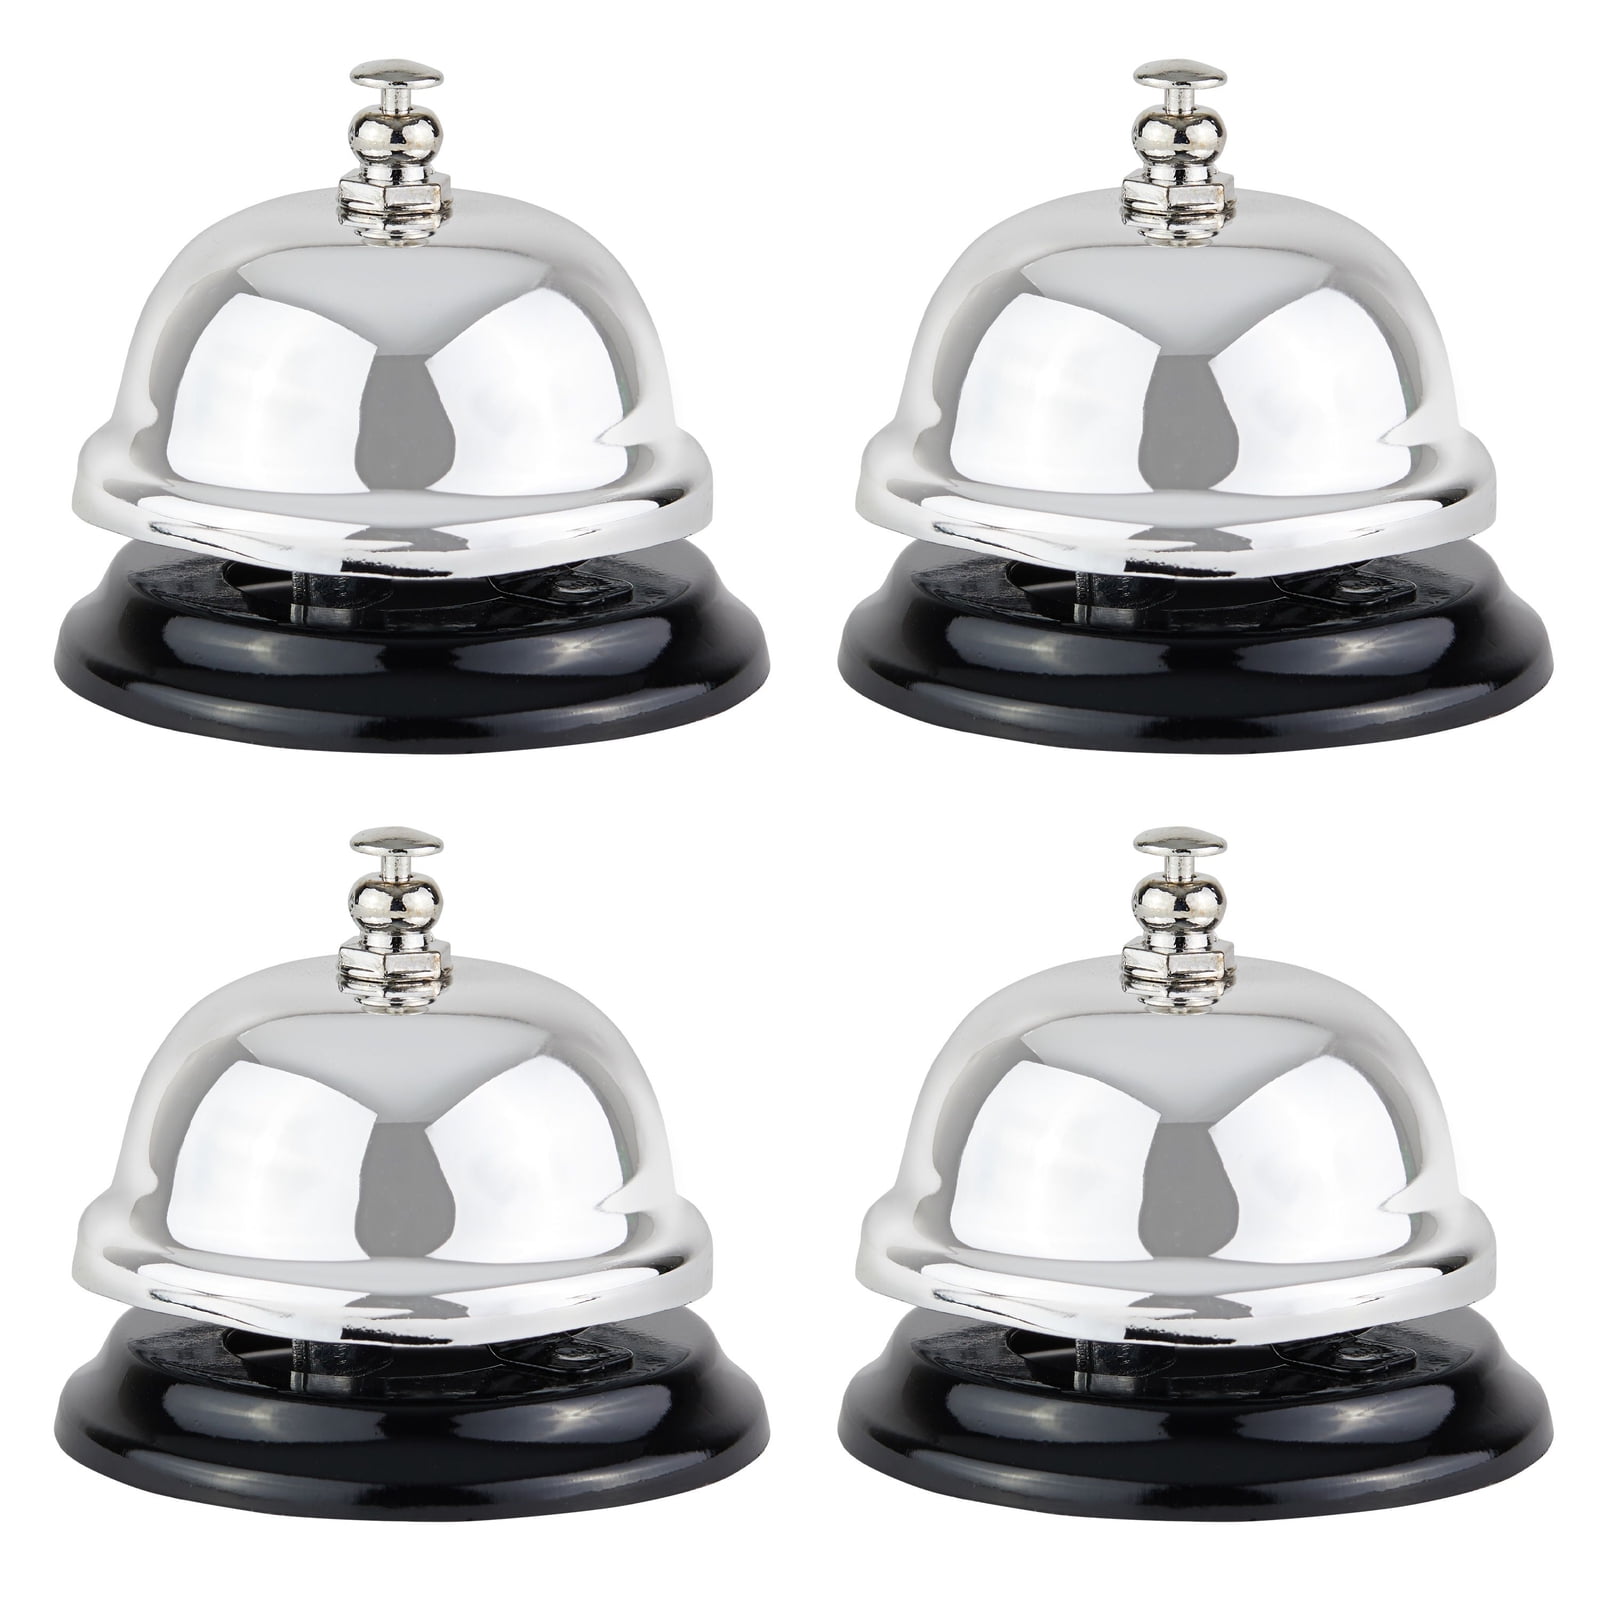 2x Hotel Service Steel Bell Call Ringer Ring Reception Restaurant Desk Kitchen for sale online 